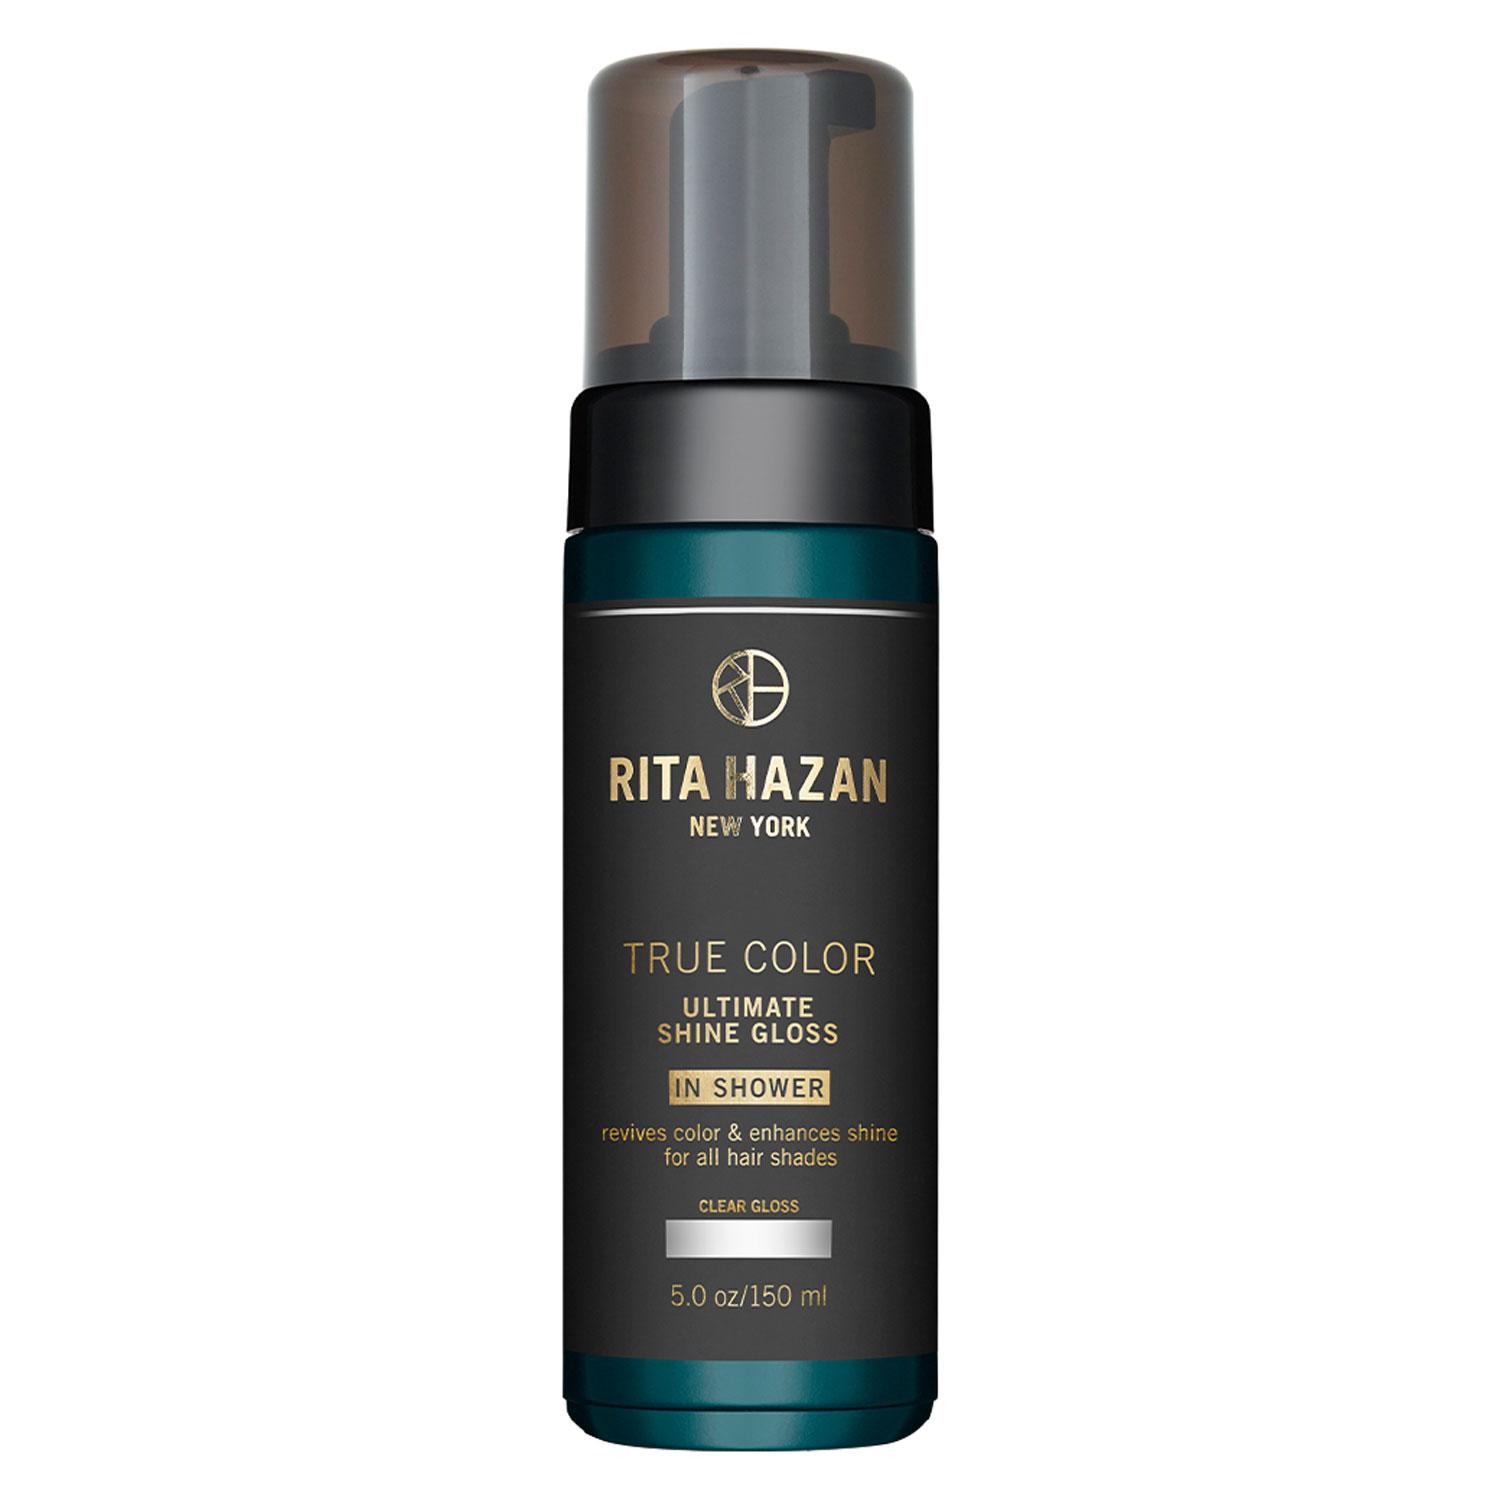 Rita Hazan New York - True Color Ultimate Shine Gloss Clear